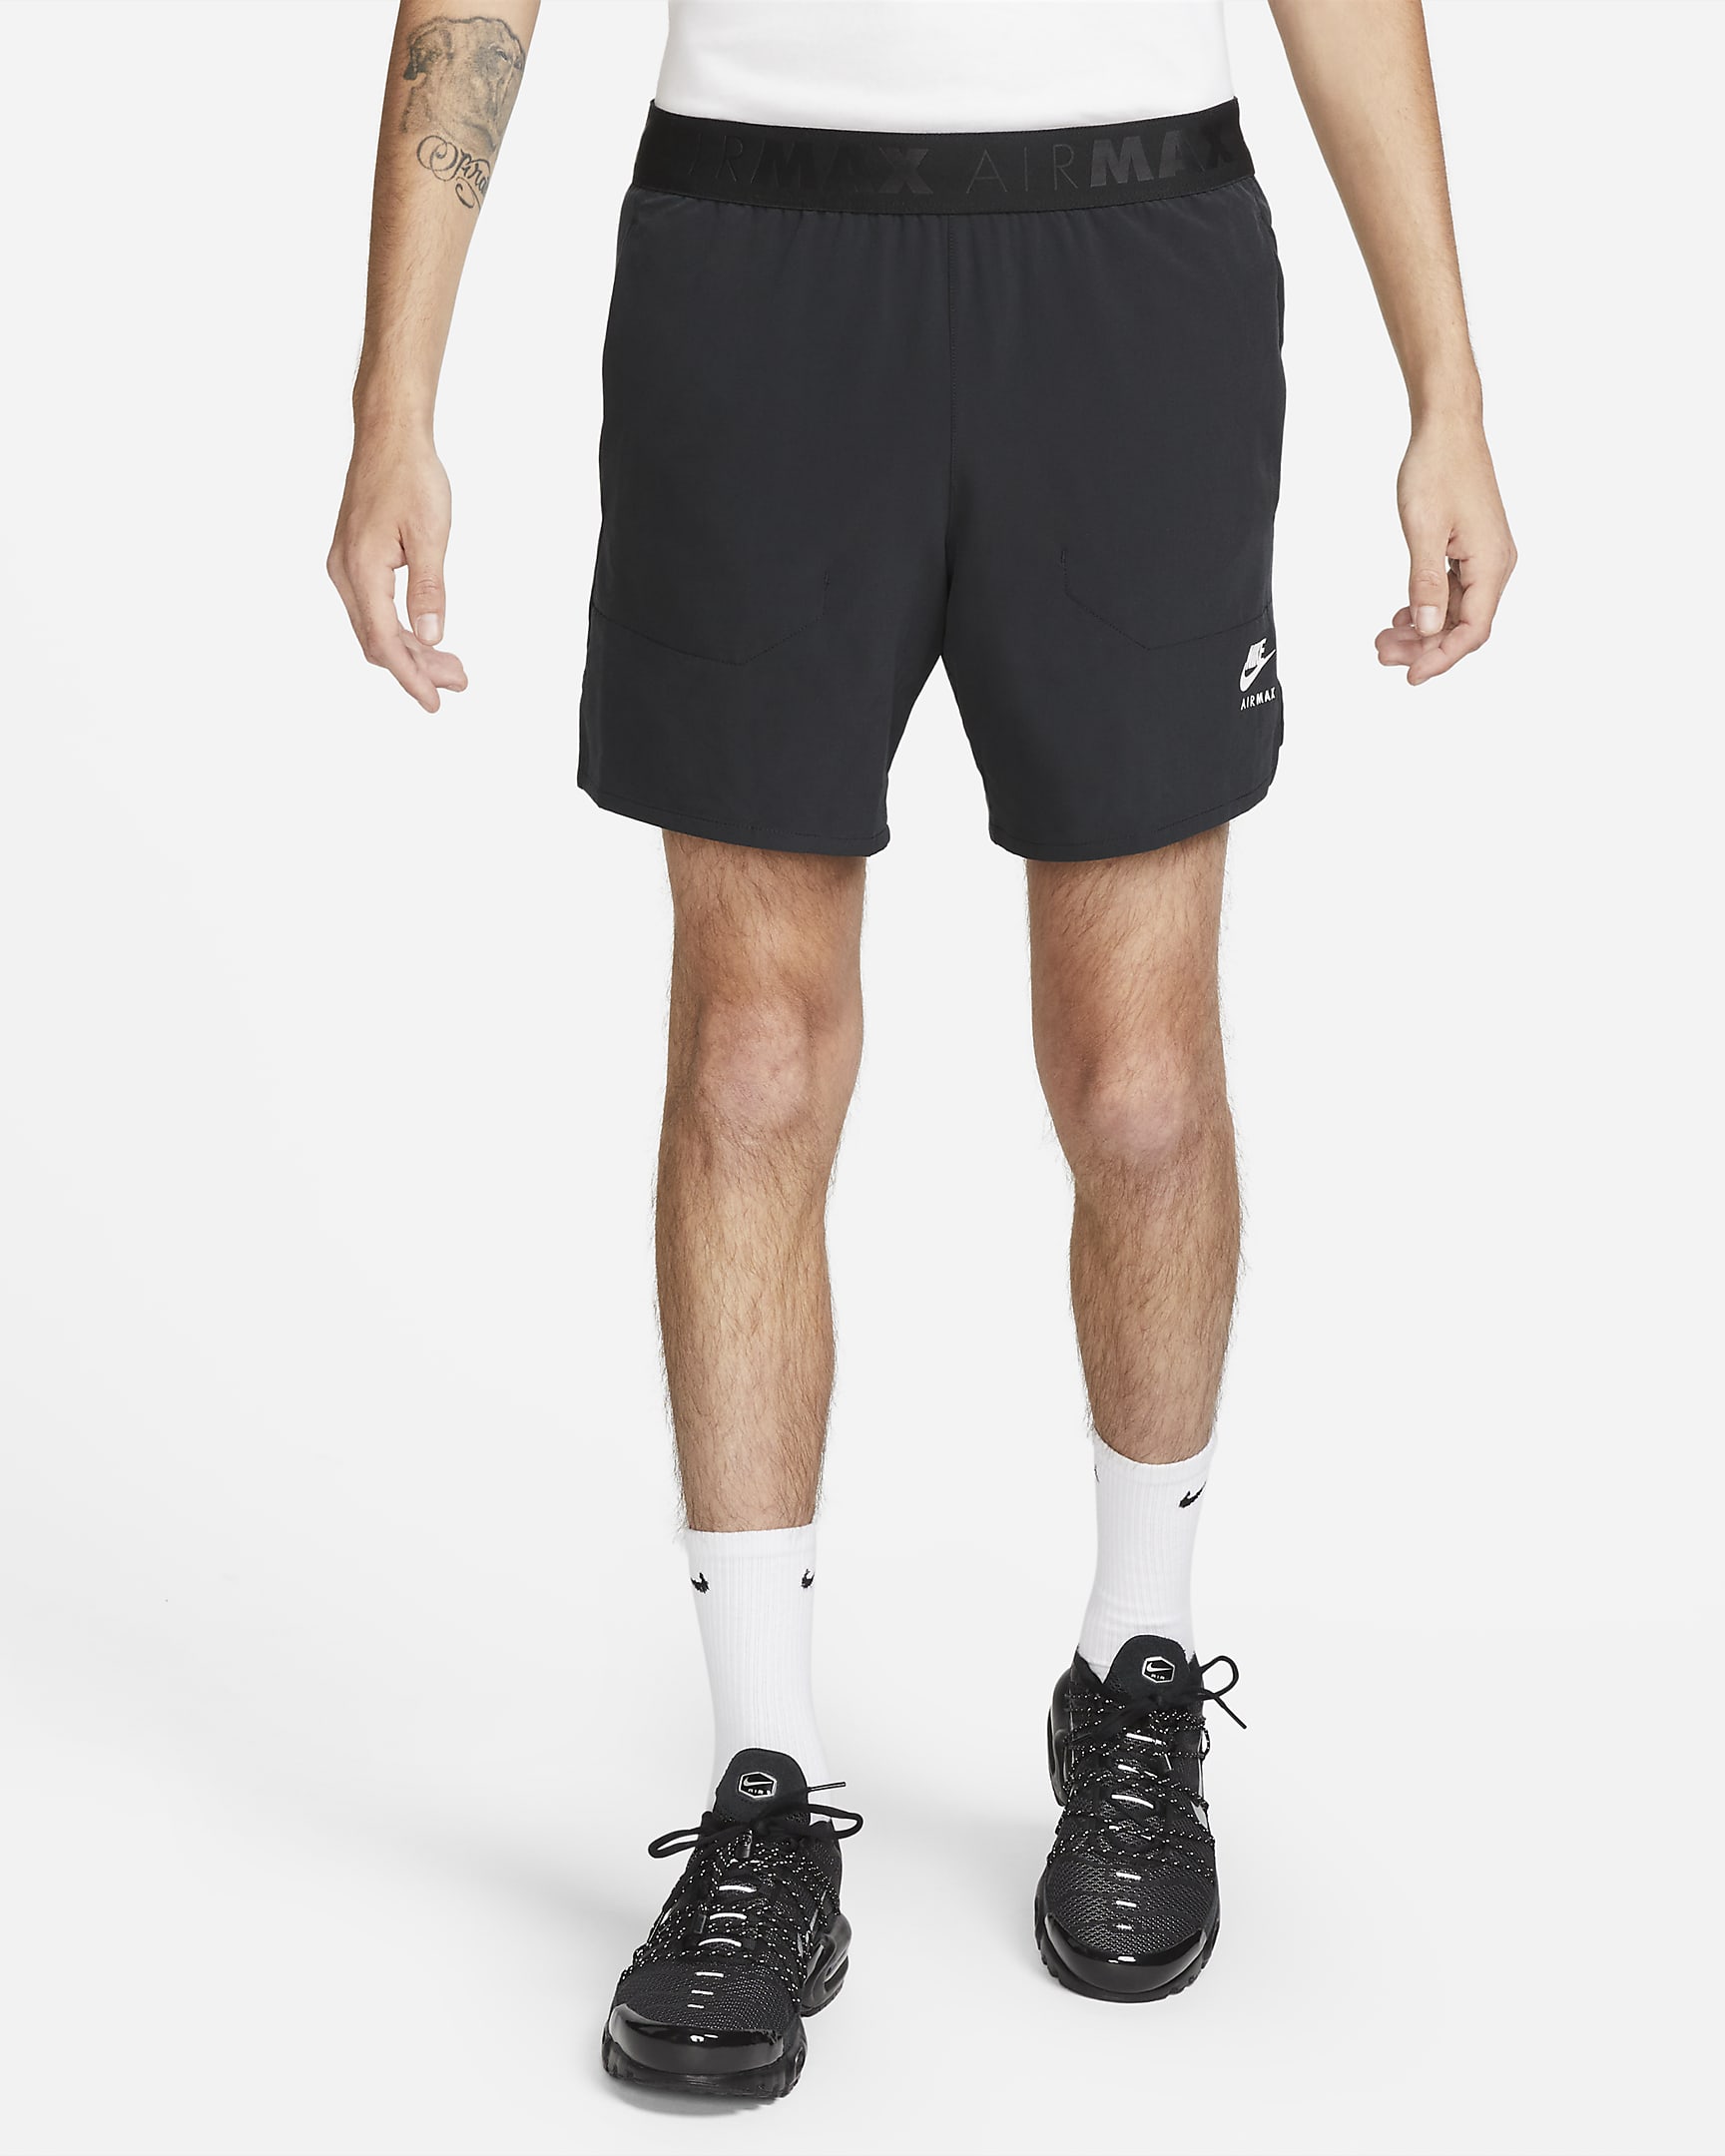 Nike Air Max Men's Shorts. Nike IL